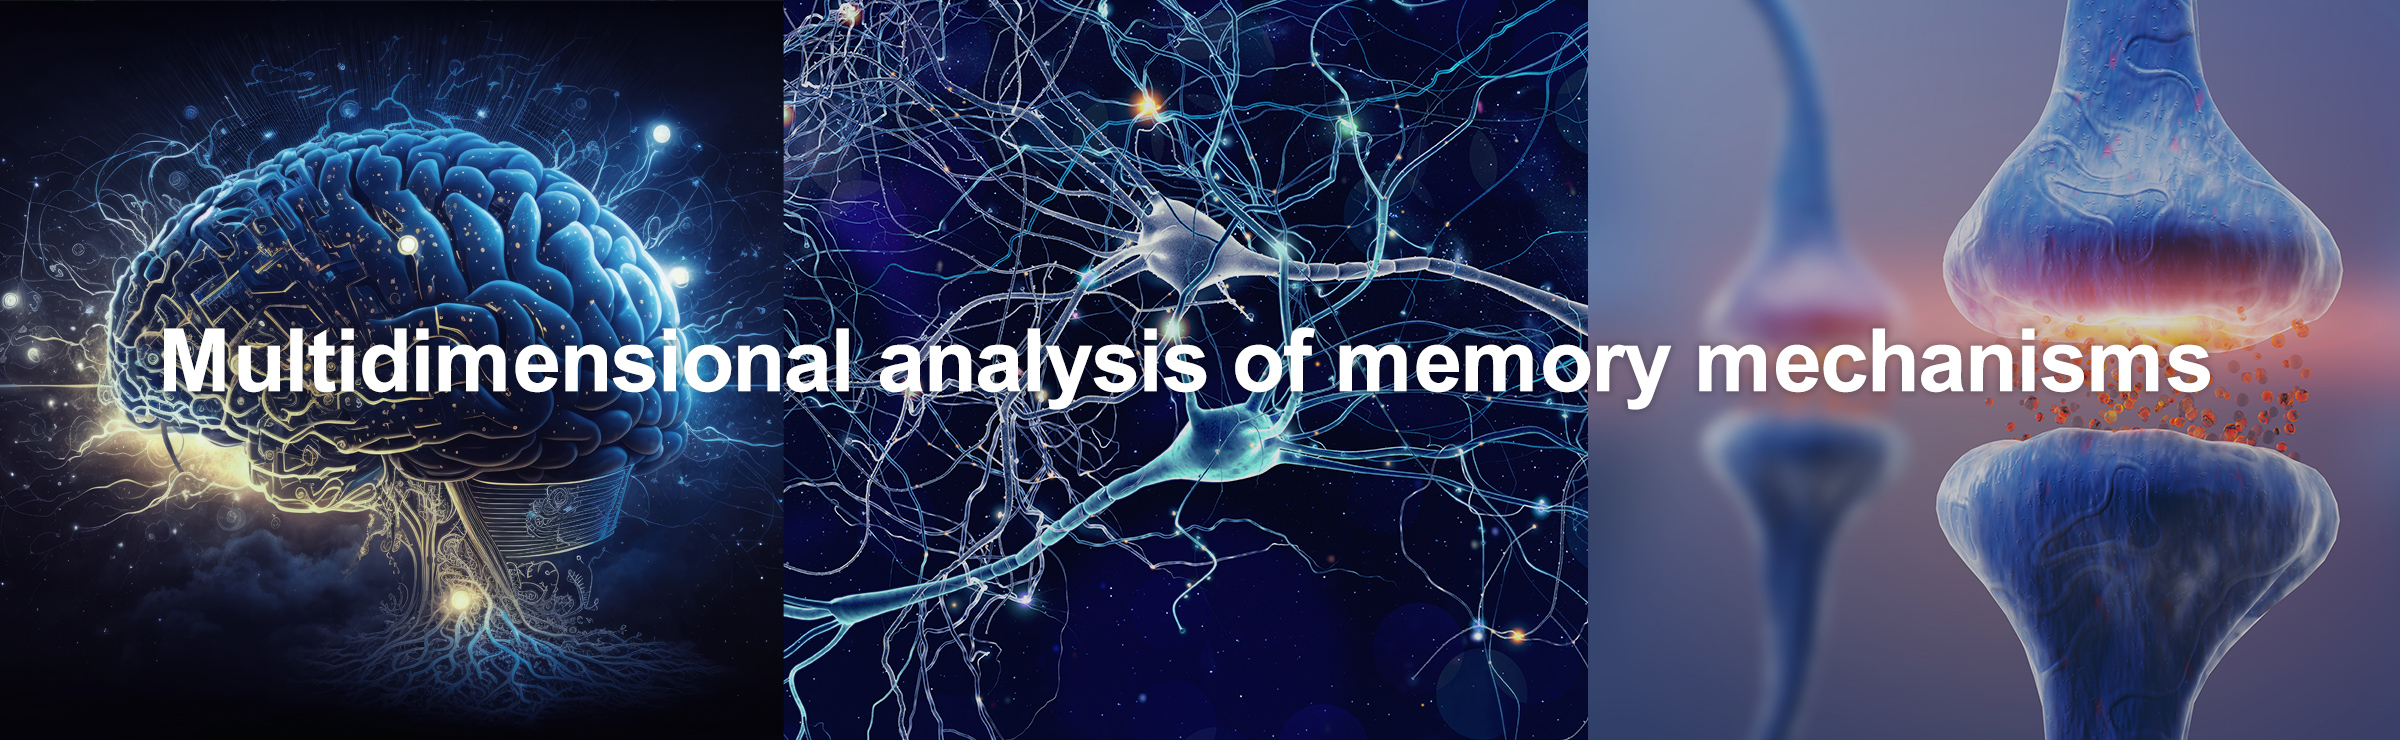 Multidimensional analysis of memory mechanisms